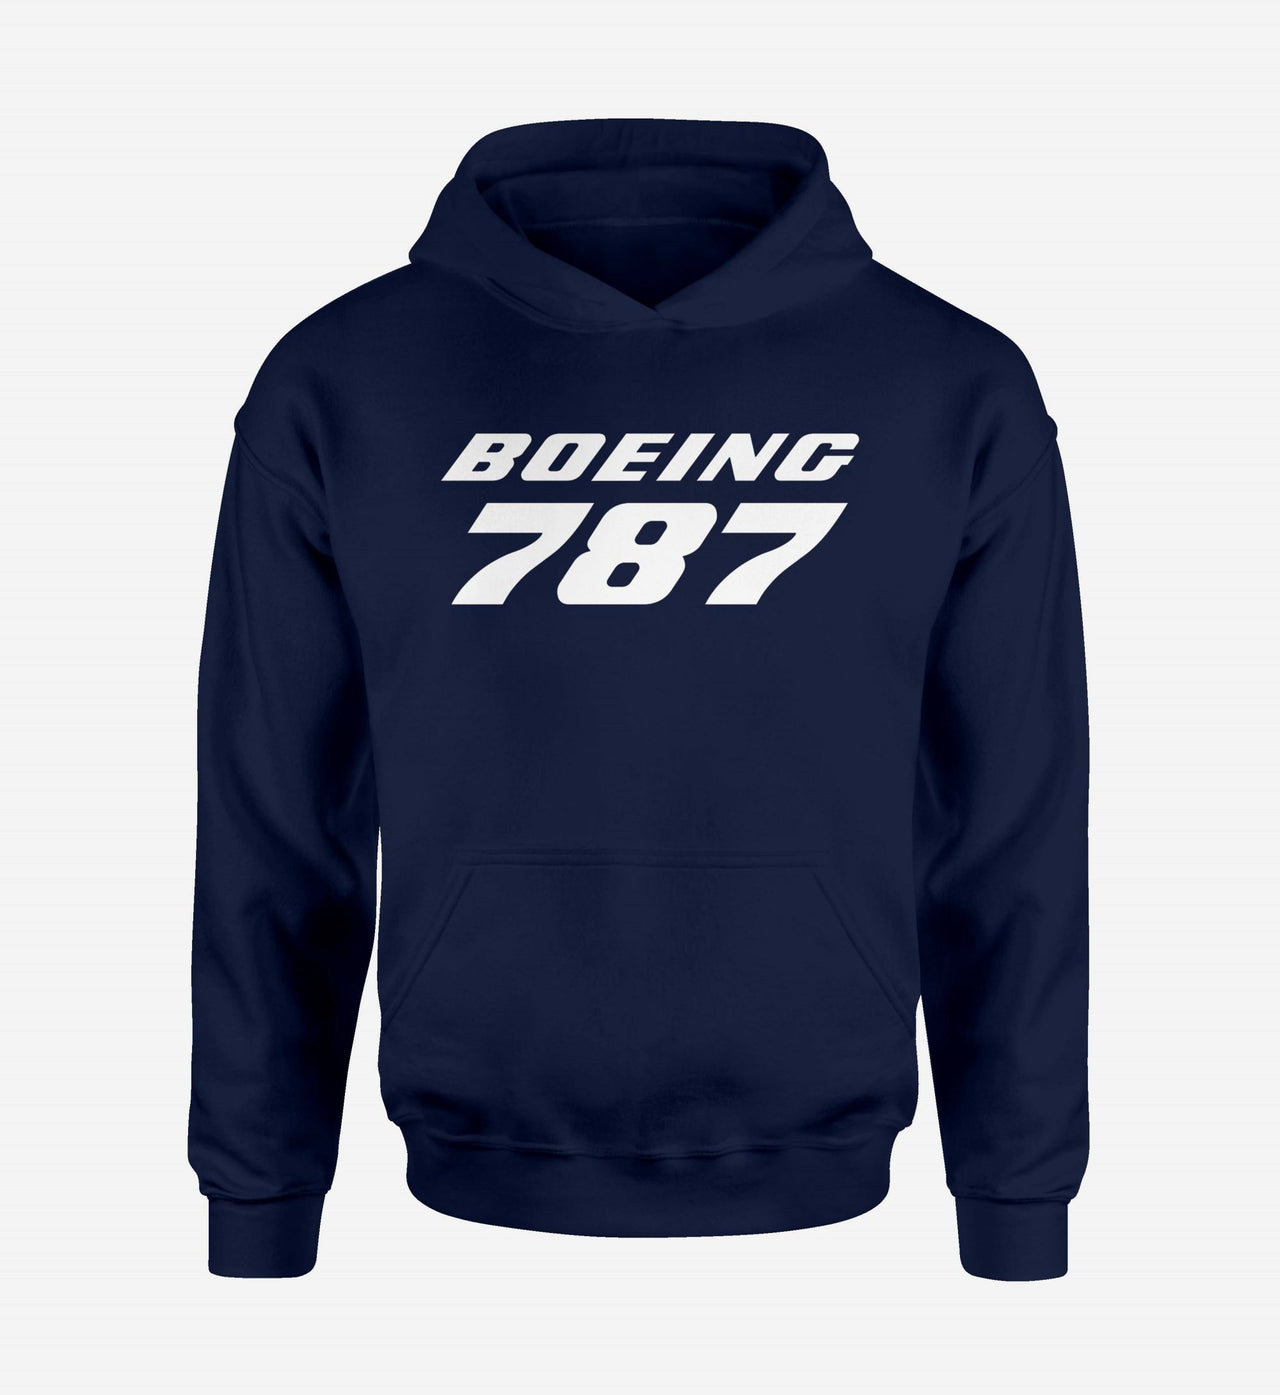 Boeing 787 & Text Designed Hoodies